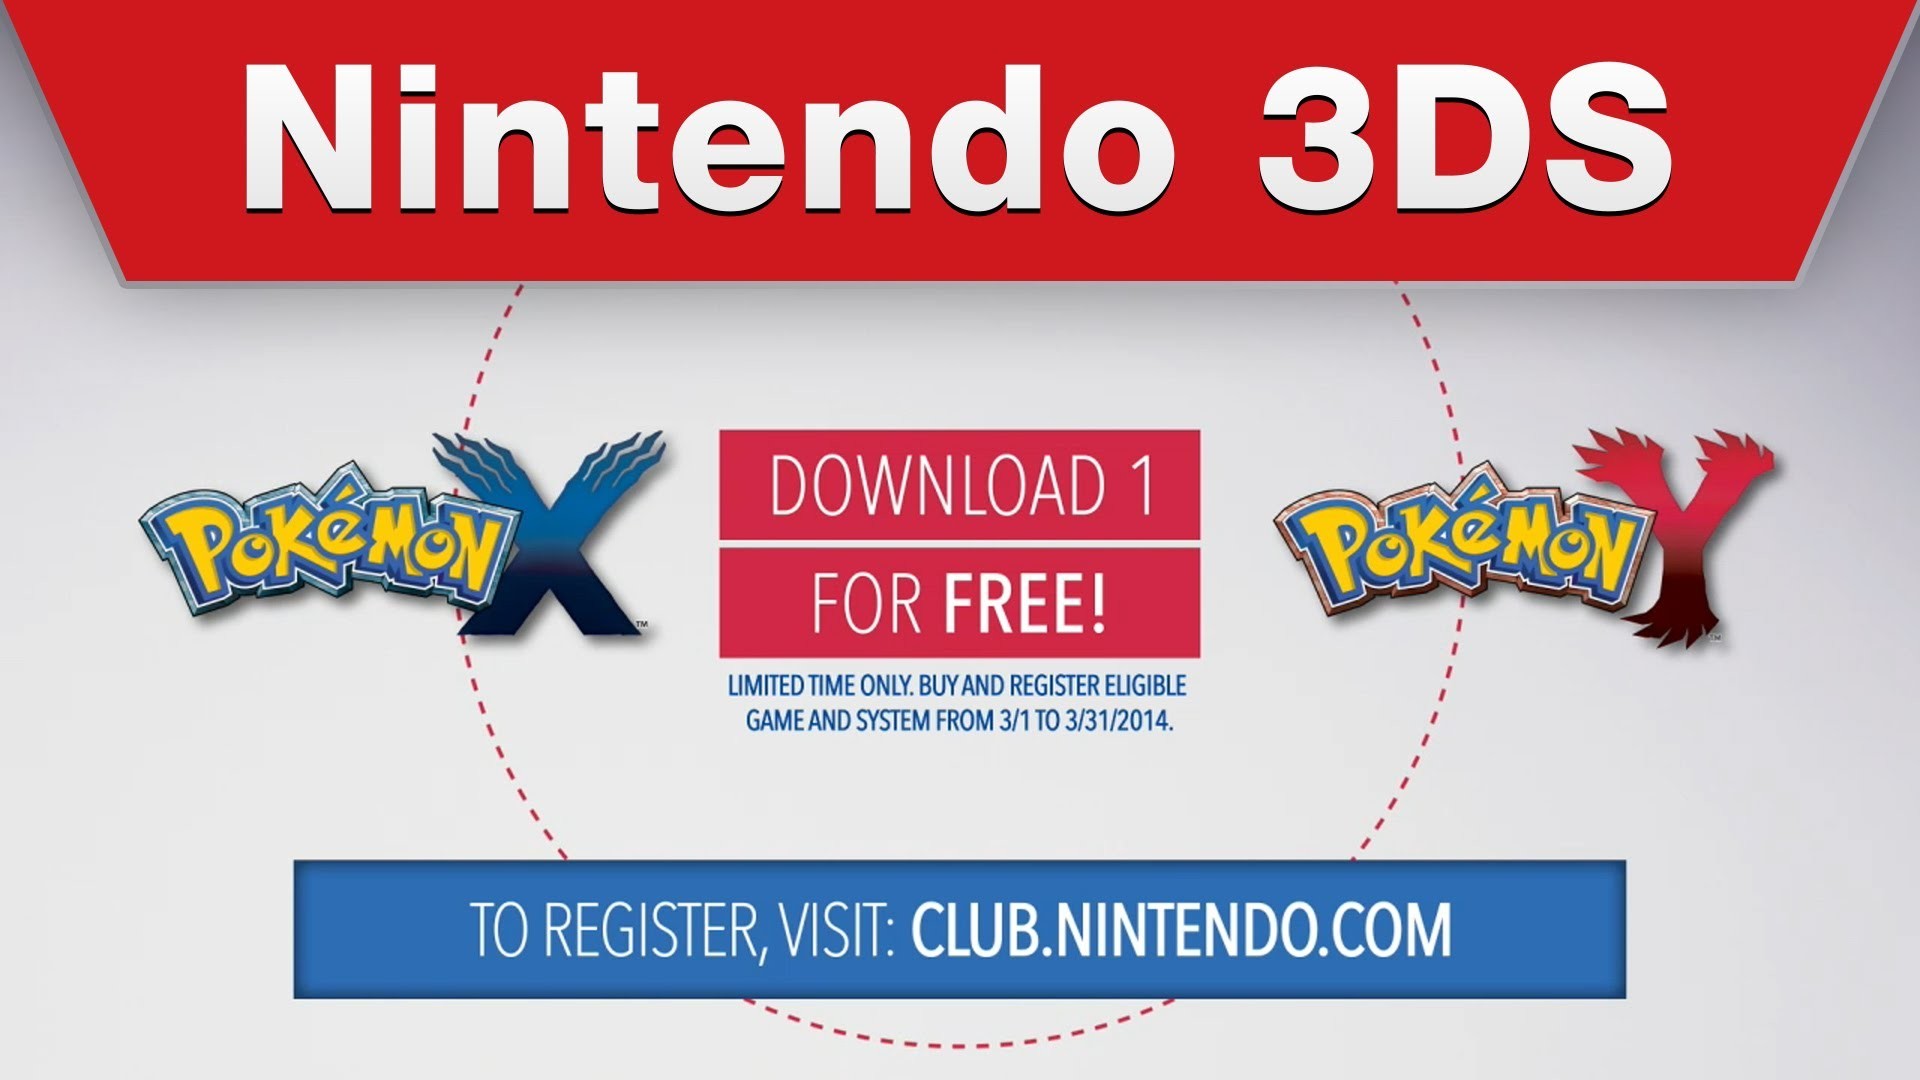 Nintendo 3ds - Nintendo Eshop Download Codes Pokemon - HD Wallpaper 